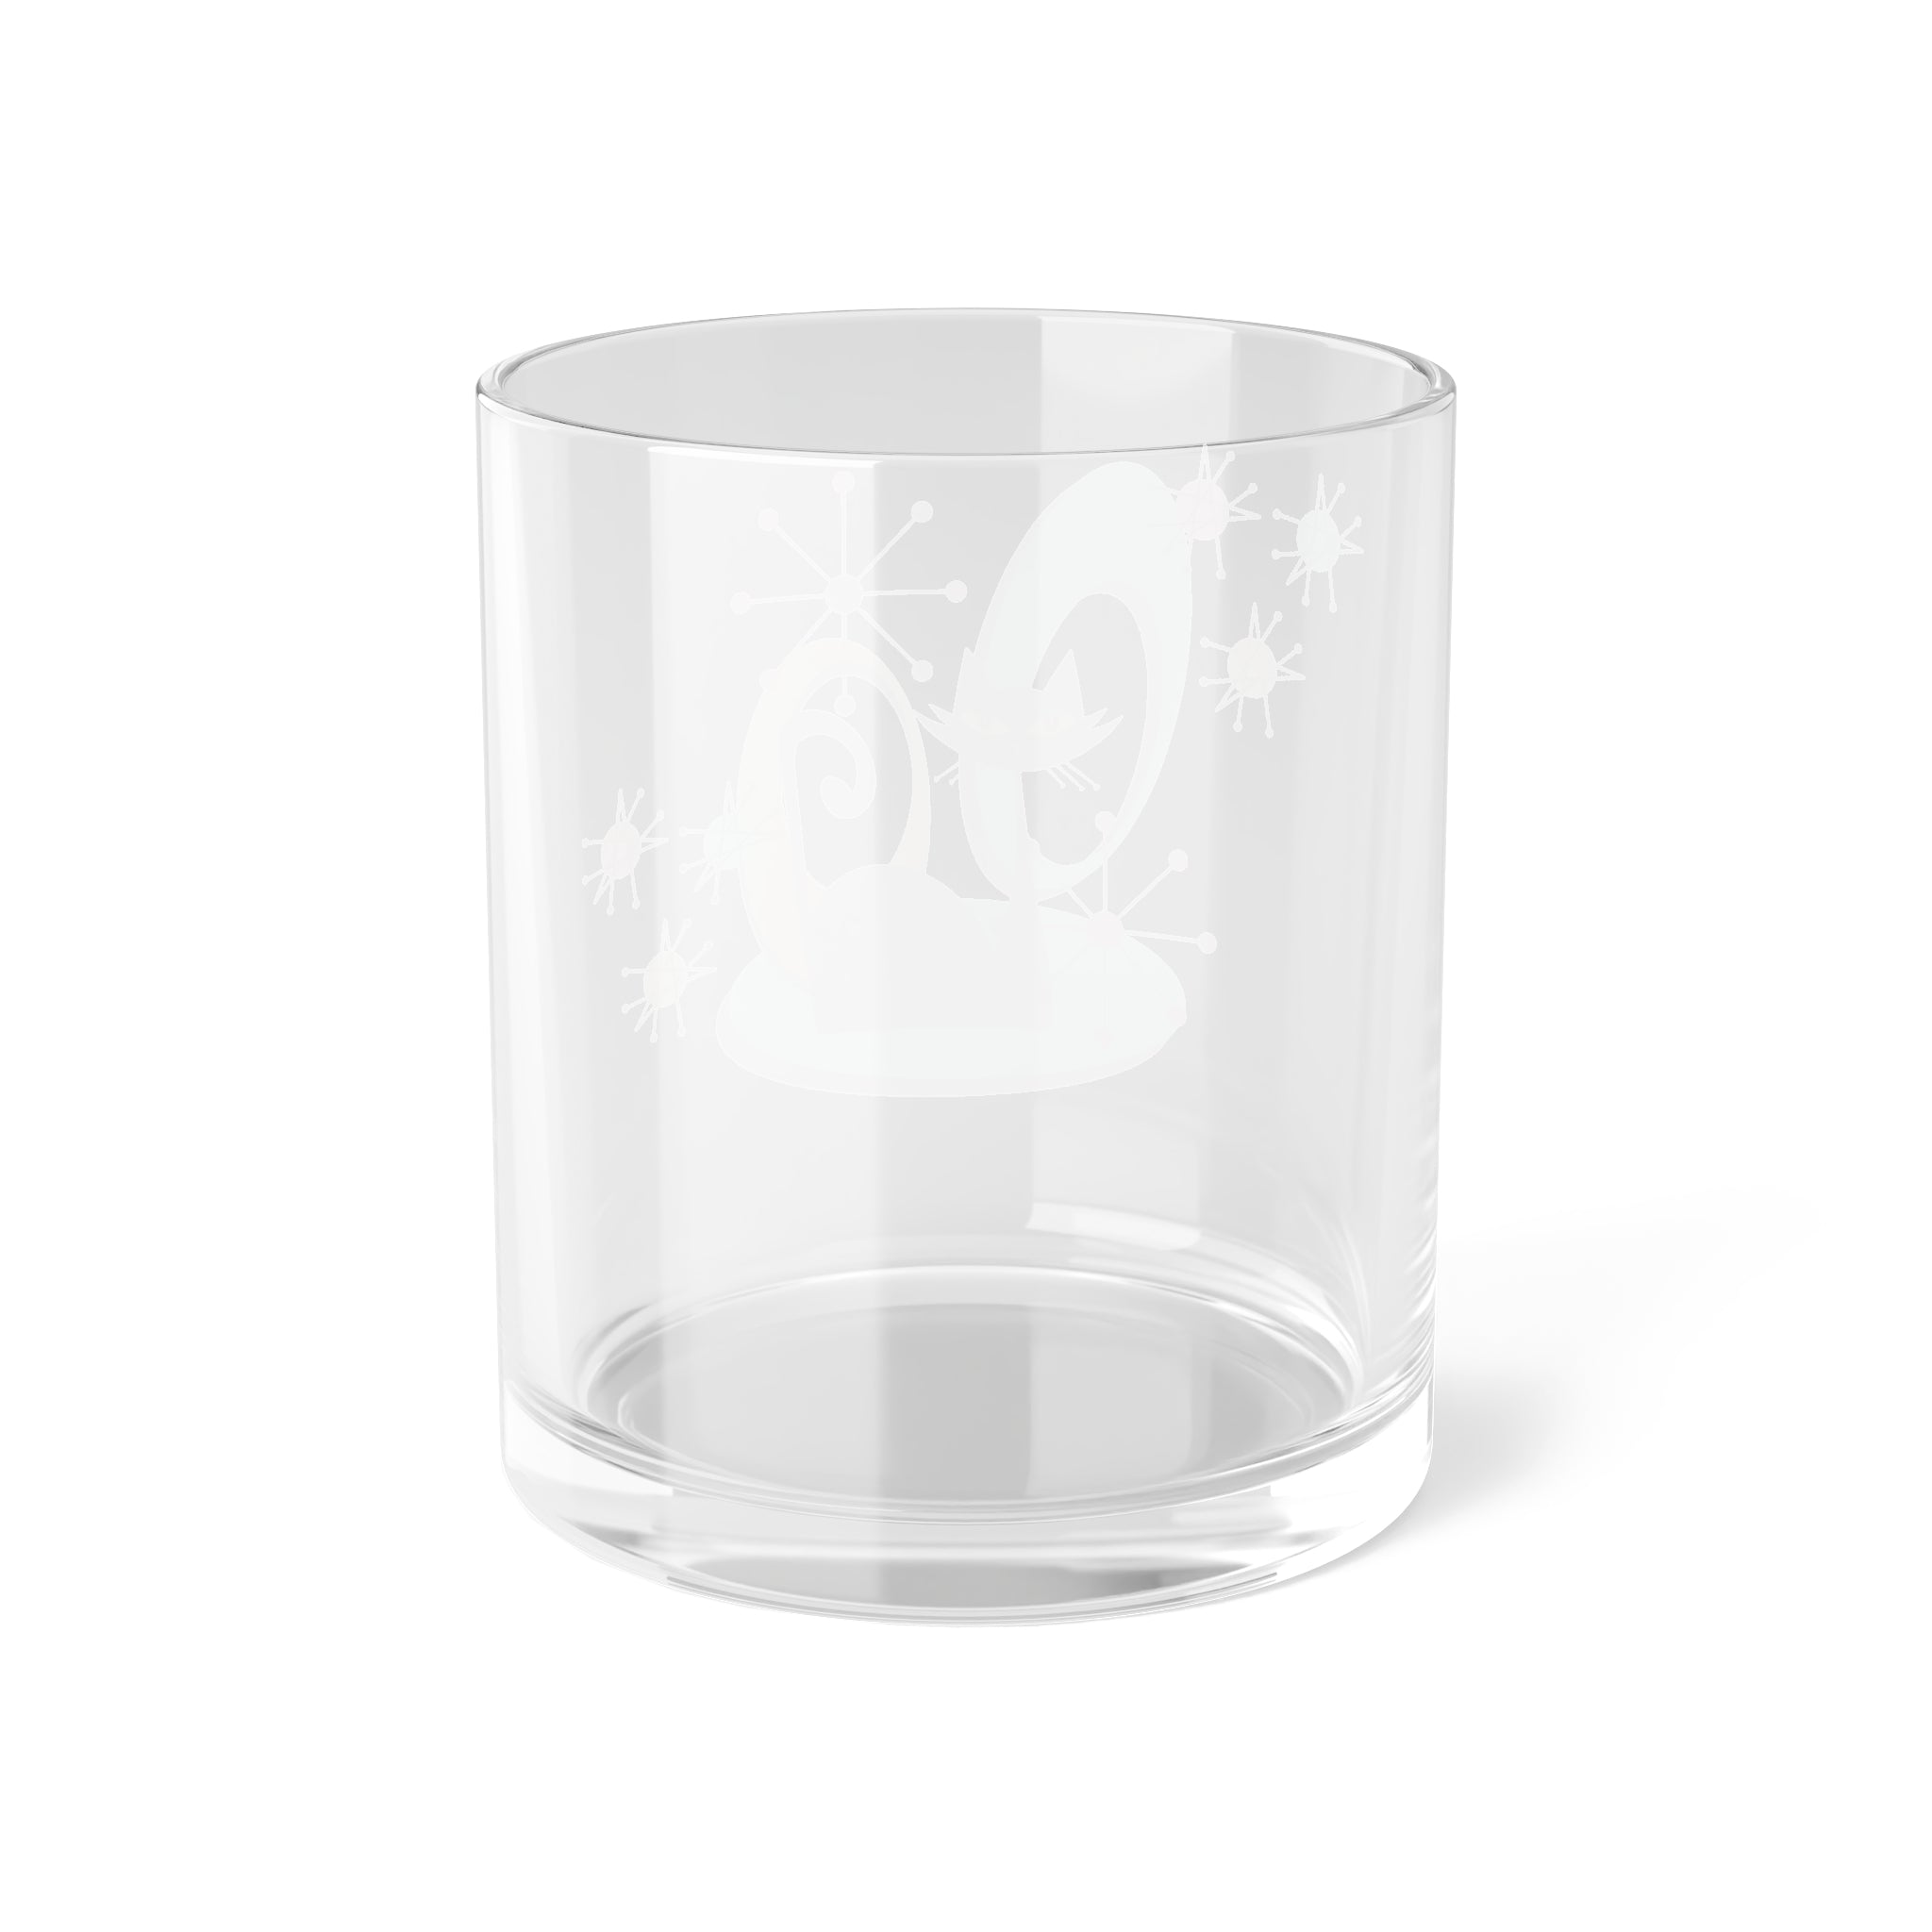 Kate McEnroe New York Atomic Cat Franciscan Starburst Bar Glass, Mid Century Modern Drinkware, Retro Chic Glassware Cocktail Glasses 10oz 16153362125152145558